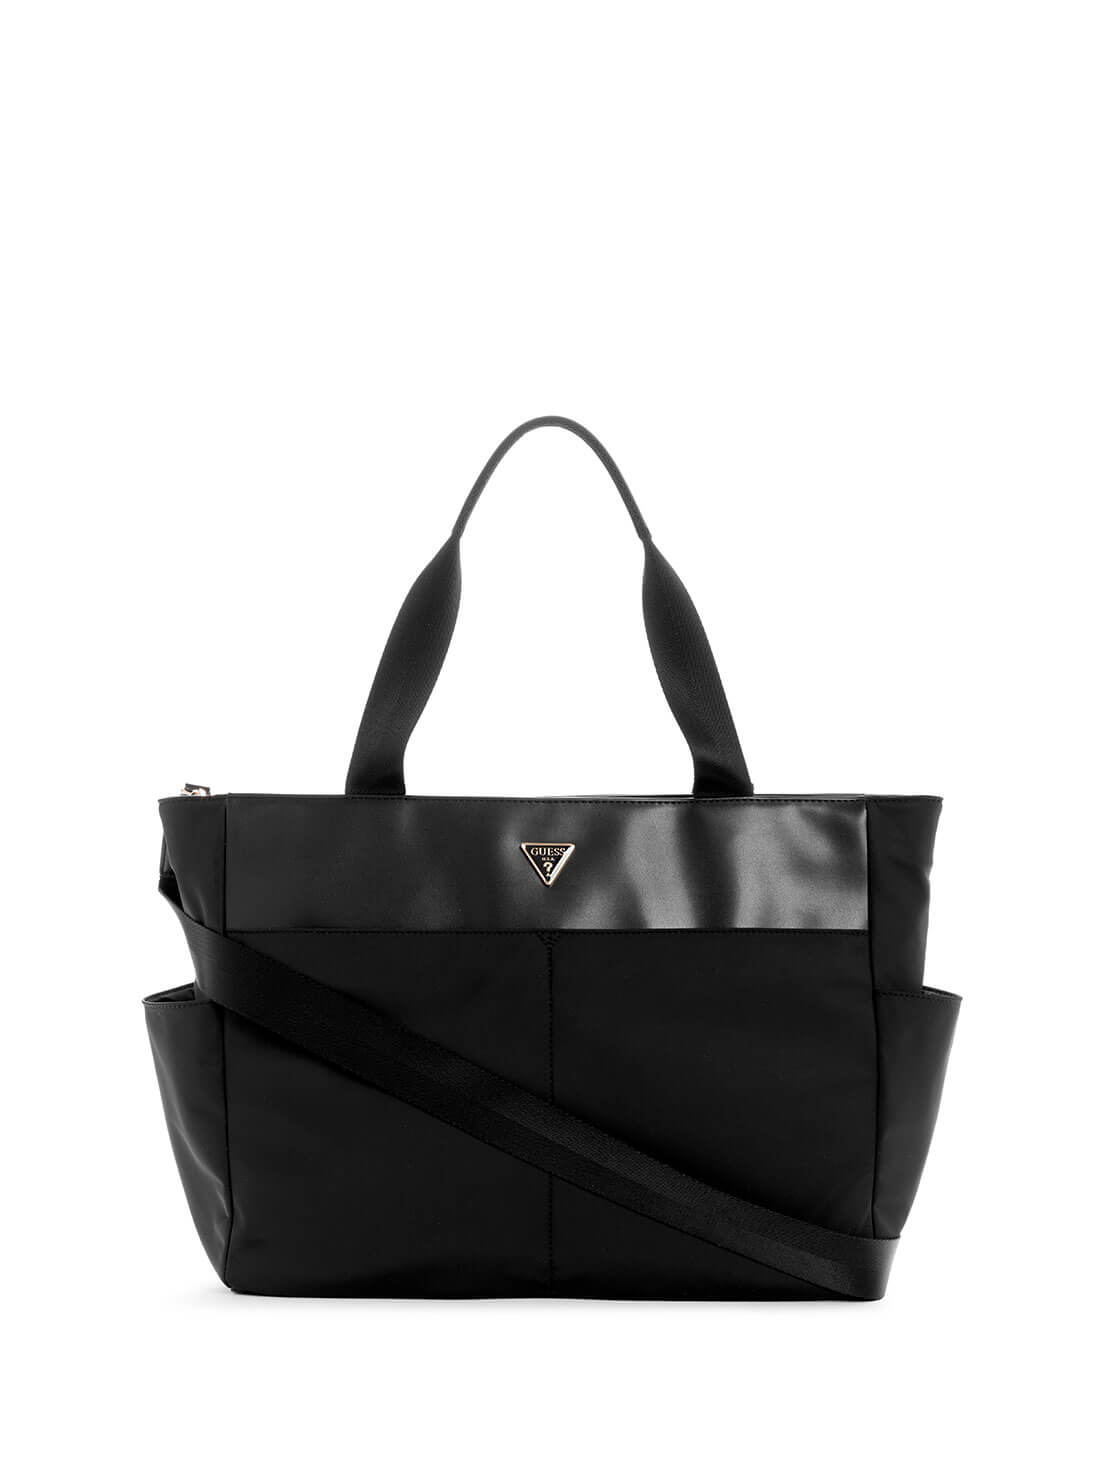 Eco Black Gemma Travel Tote Bag | GUESS Women's Handbags | front view